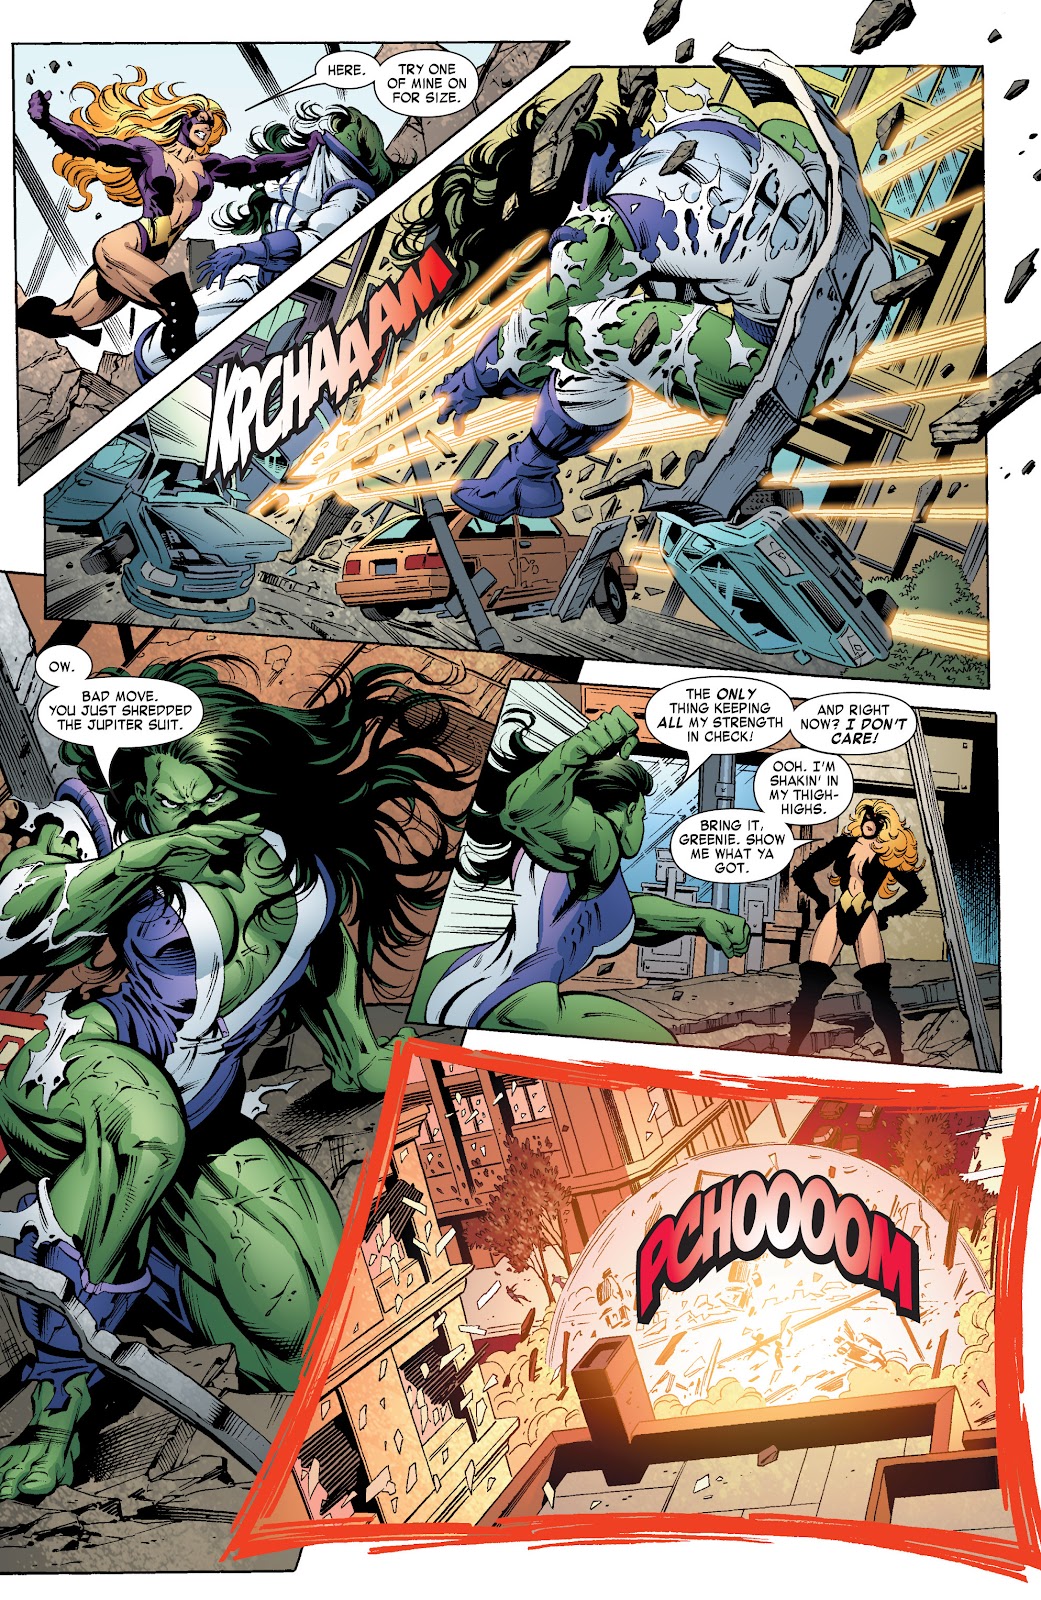 She Hulk V1 011 | Read She Hulk V1 011 comic online in high quality